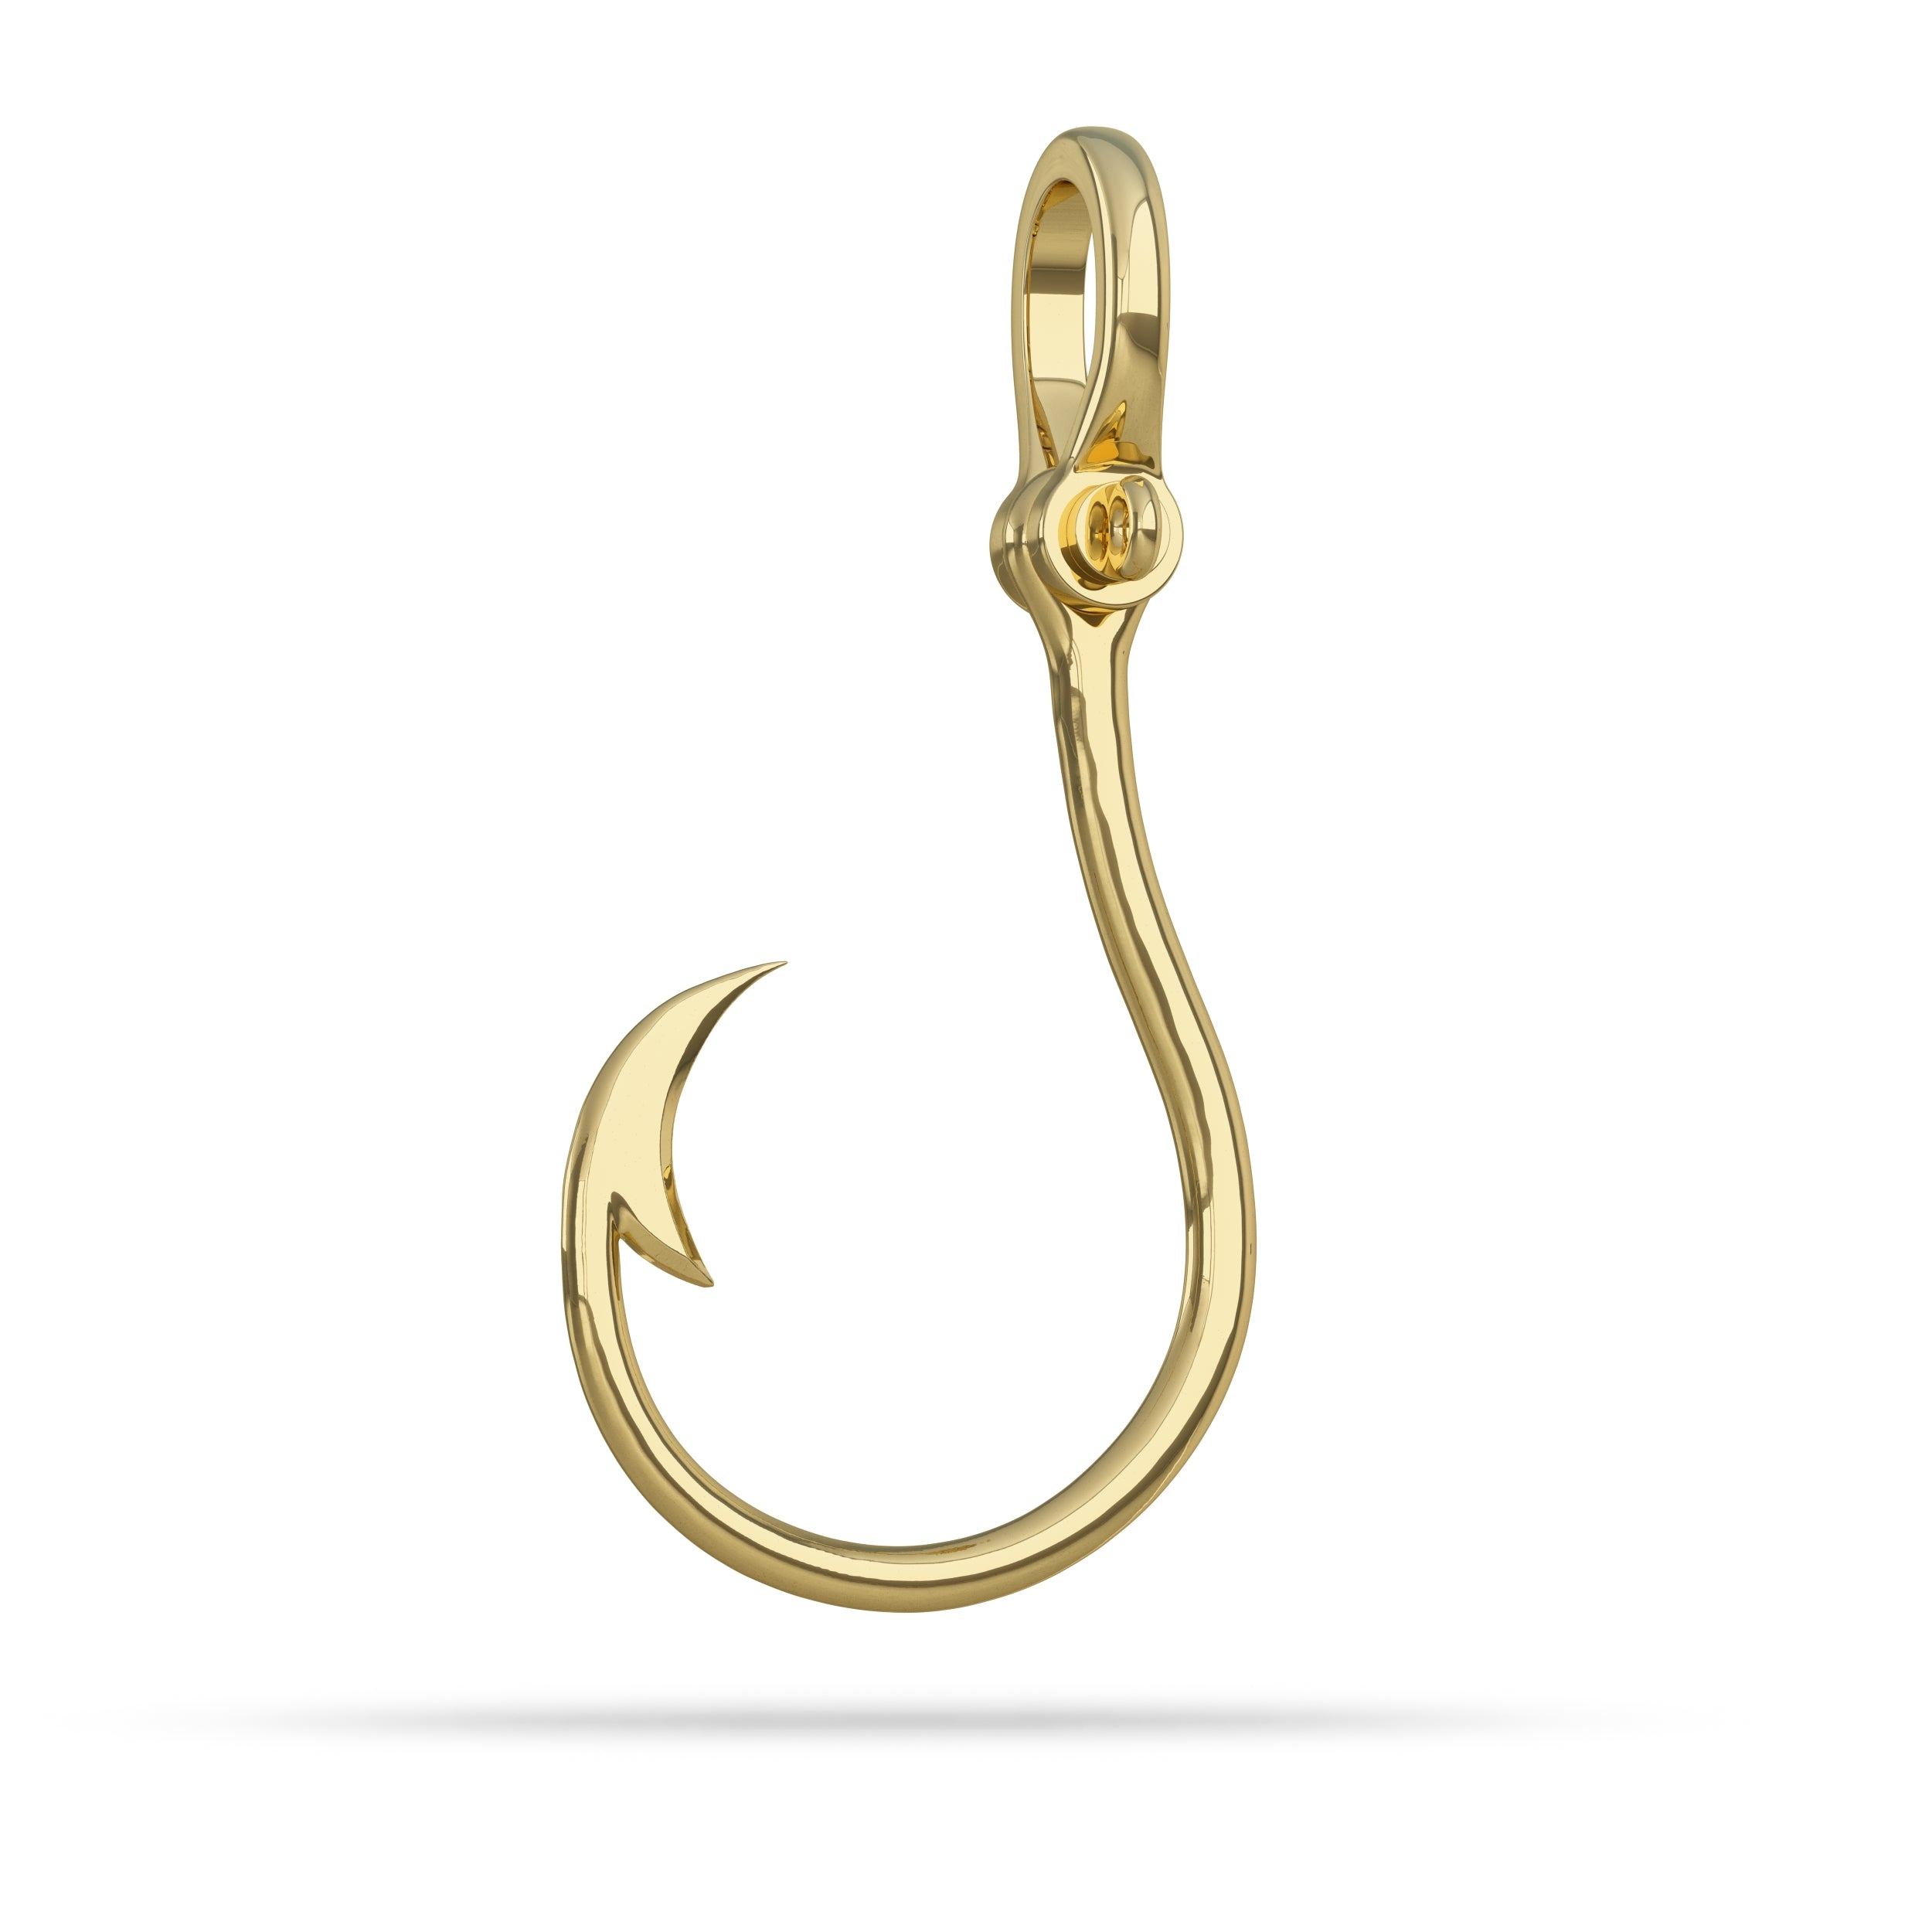 Medium Gold fishing hook pendant with Shackle Bail